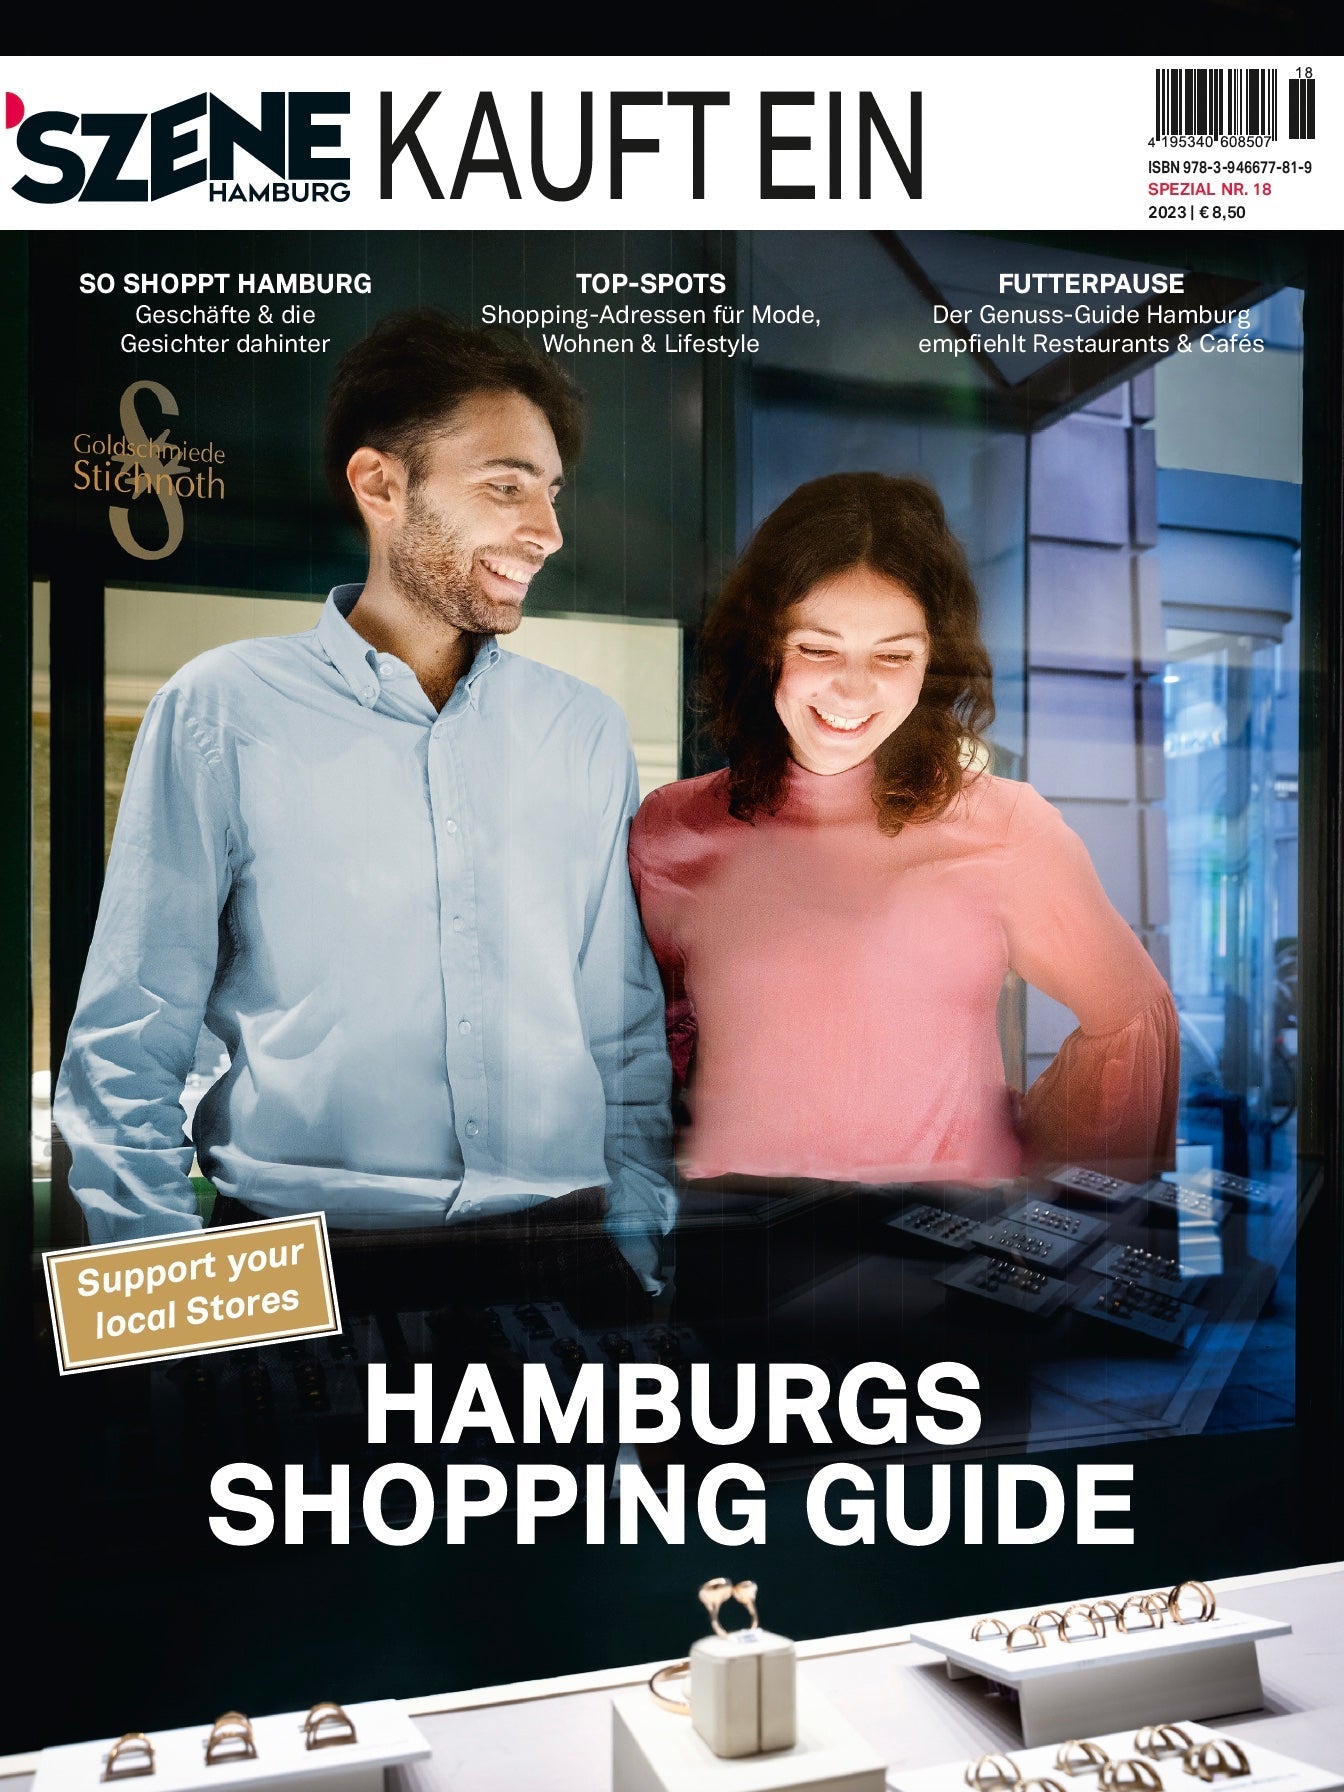 SZENE HAMBURG Kauft Ein 18/2022 „Hamburgs Shopping Guide“ - SZENE HAMBURG Shop